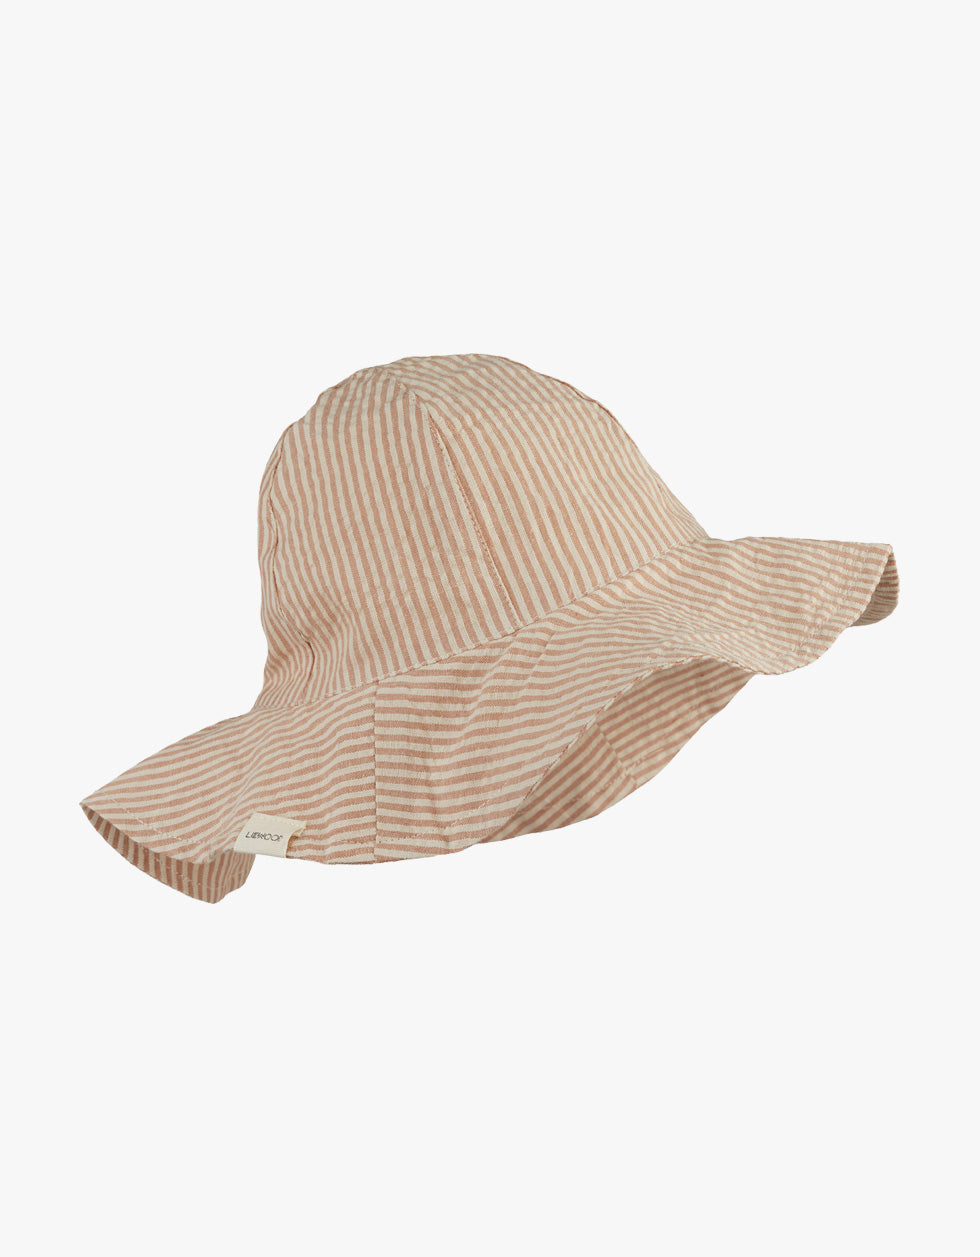 Amelia Sun Hat - Y/D Stripe: Tuscany Rose/Sandy